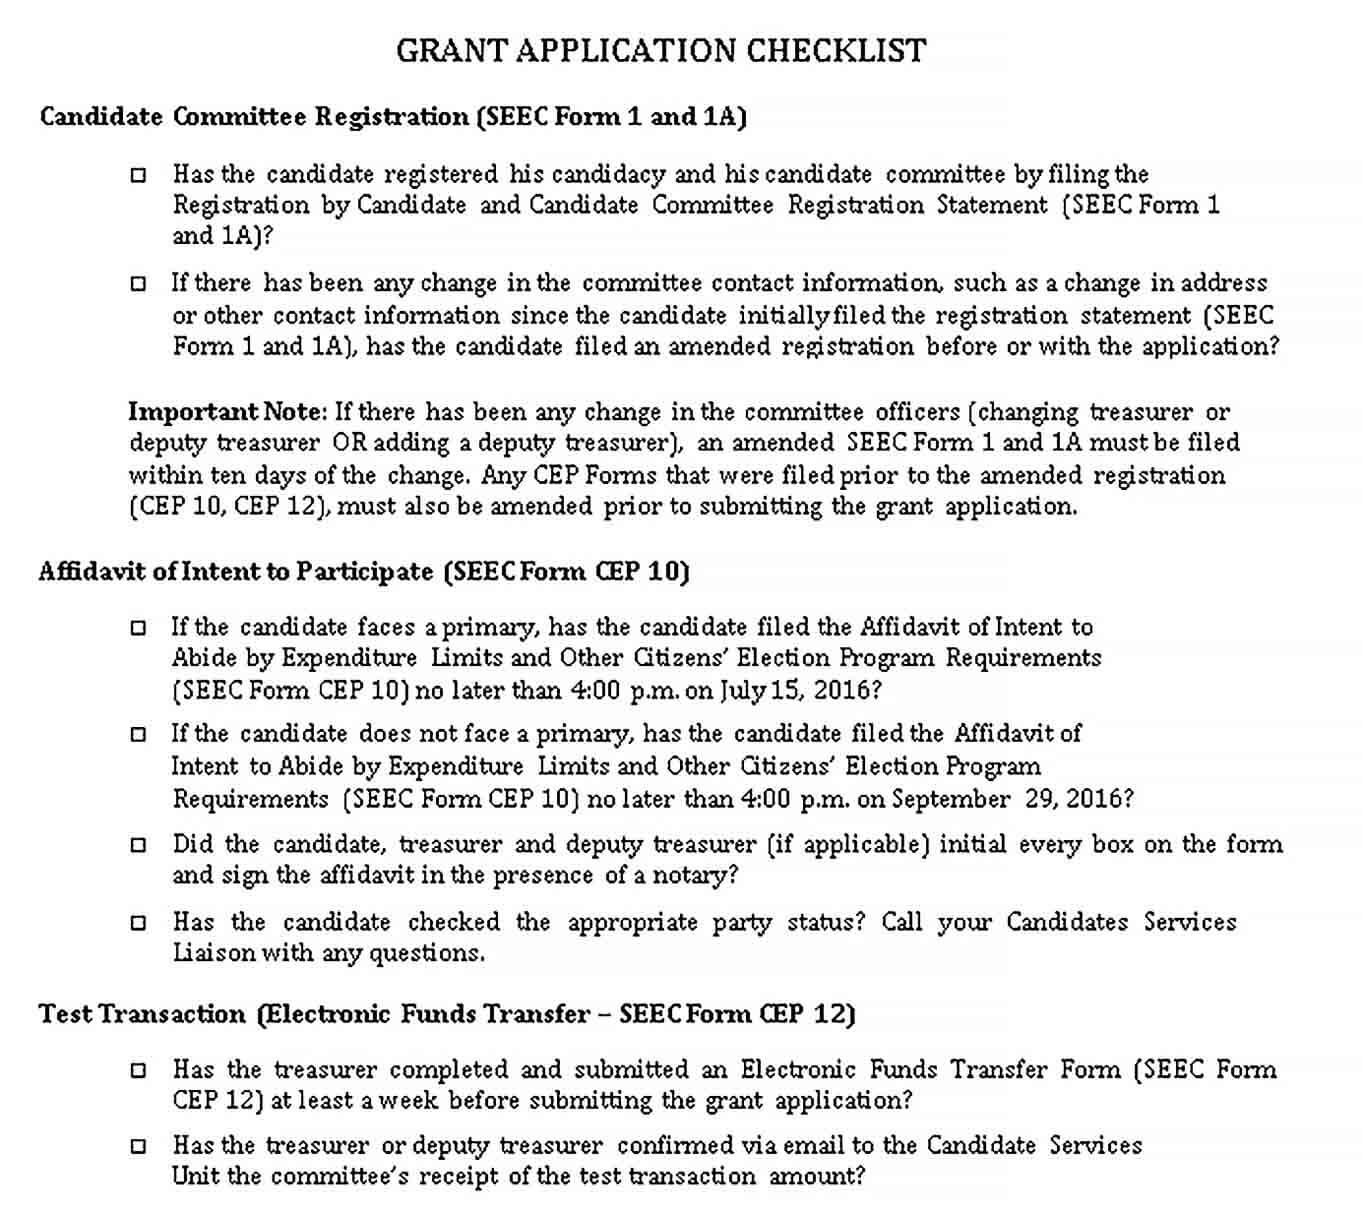 Sample Election Grant Application Checklist Template